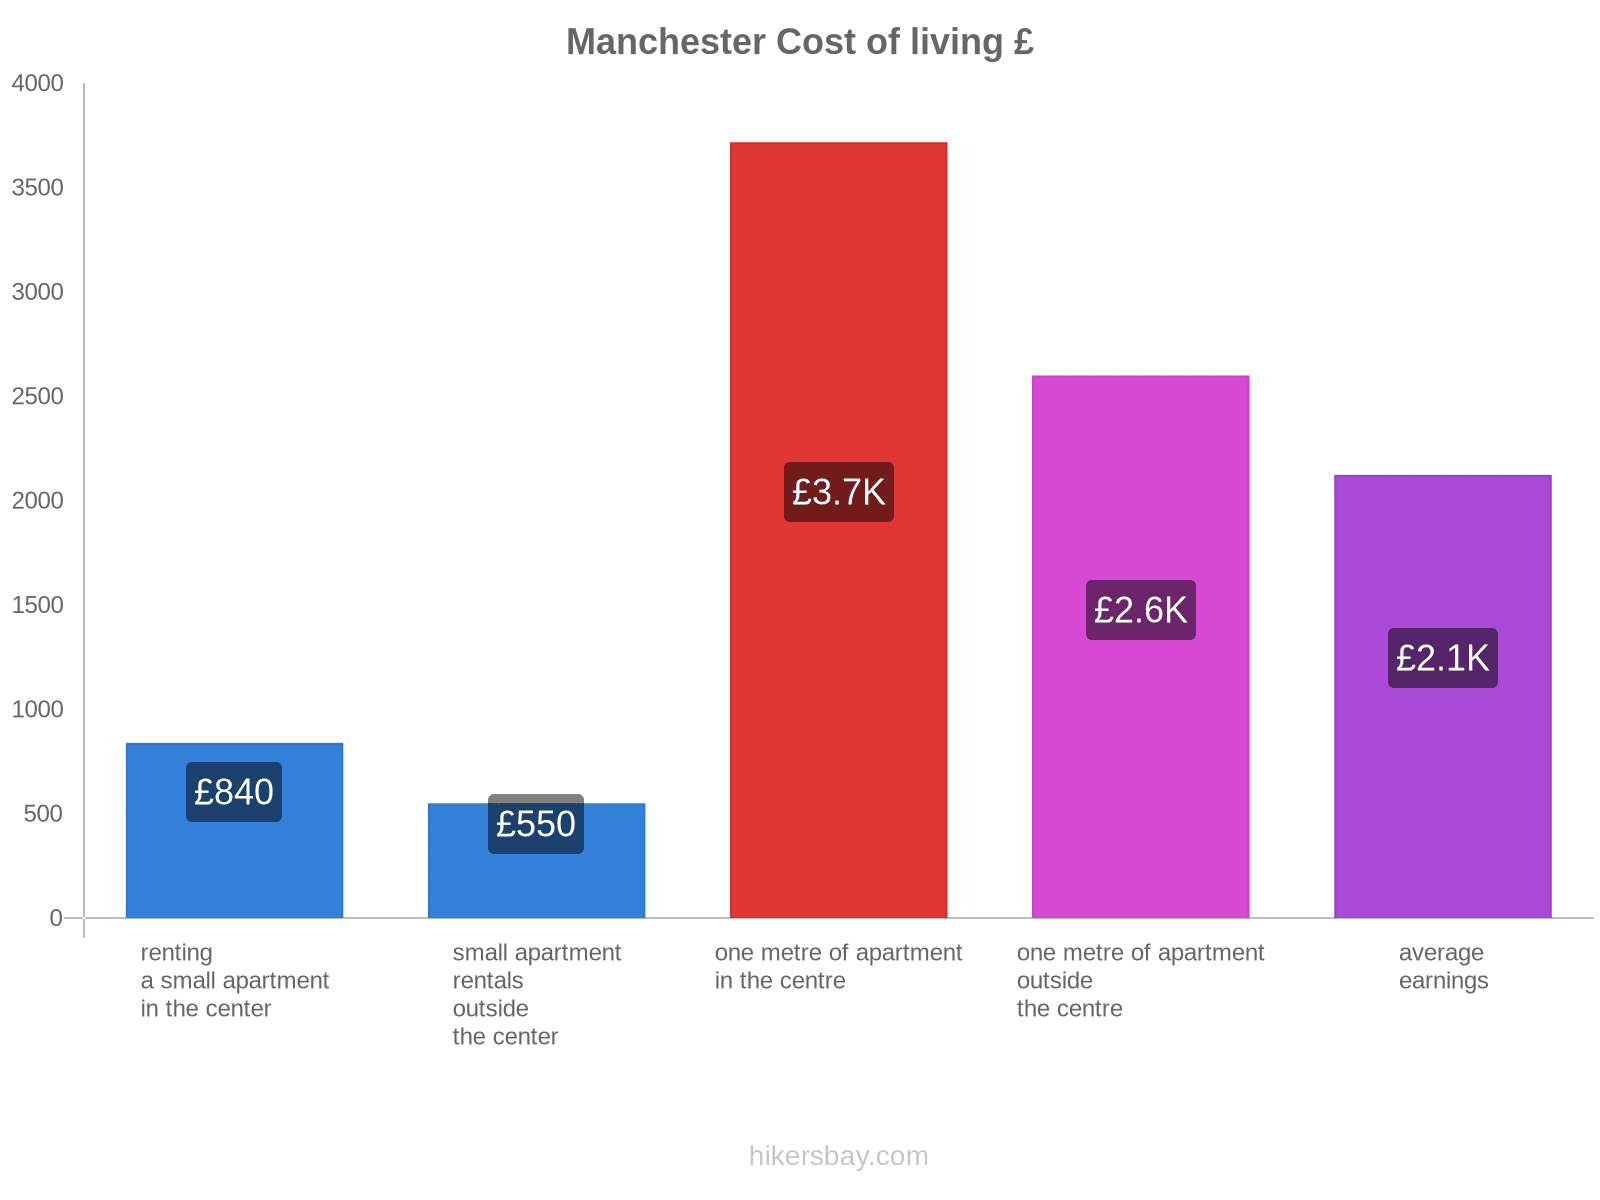 Manchester cost of living hikersbay.com